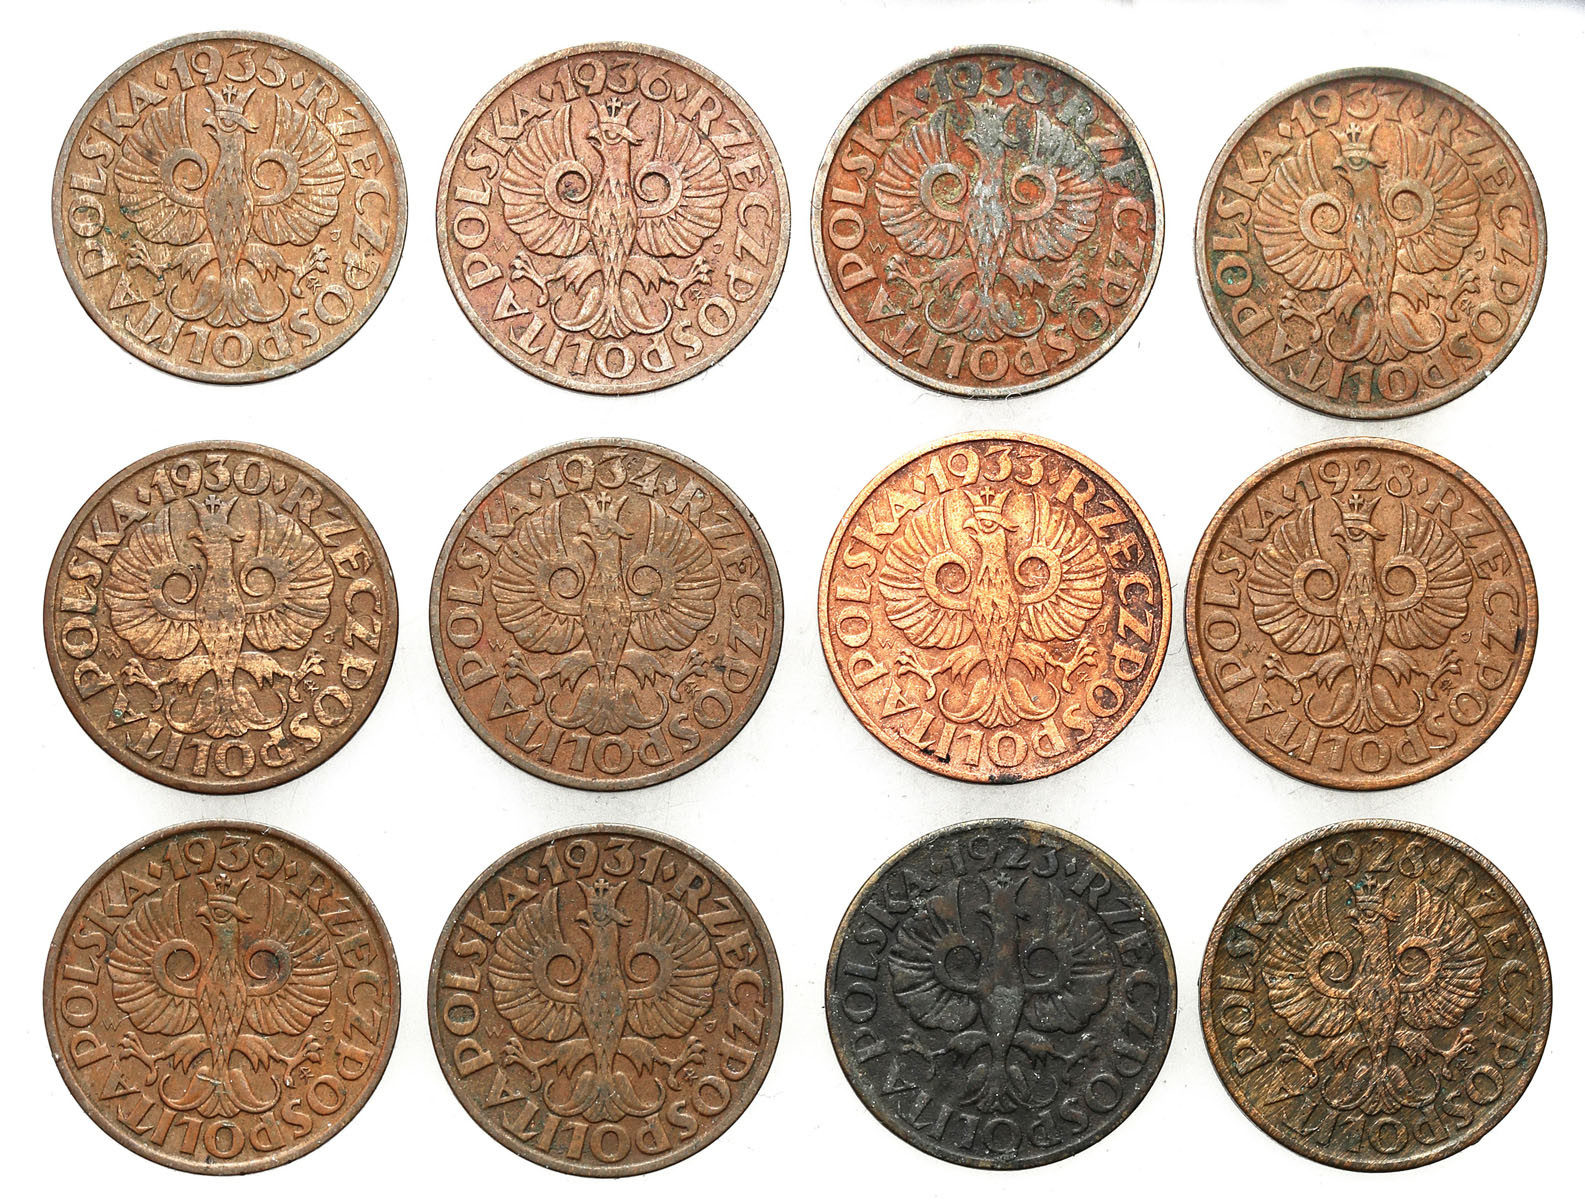 II RP. 2 grosze 1923-1939, zestaw 12 monet